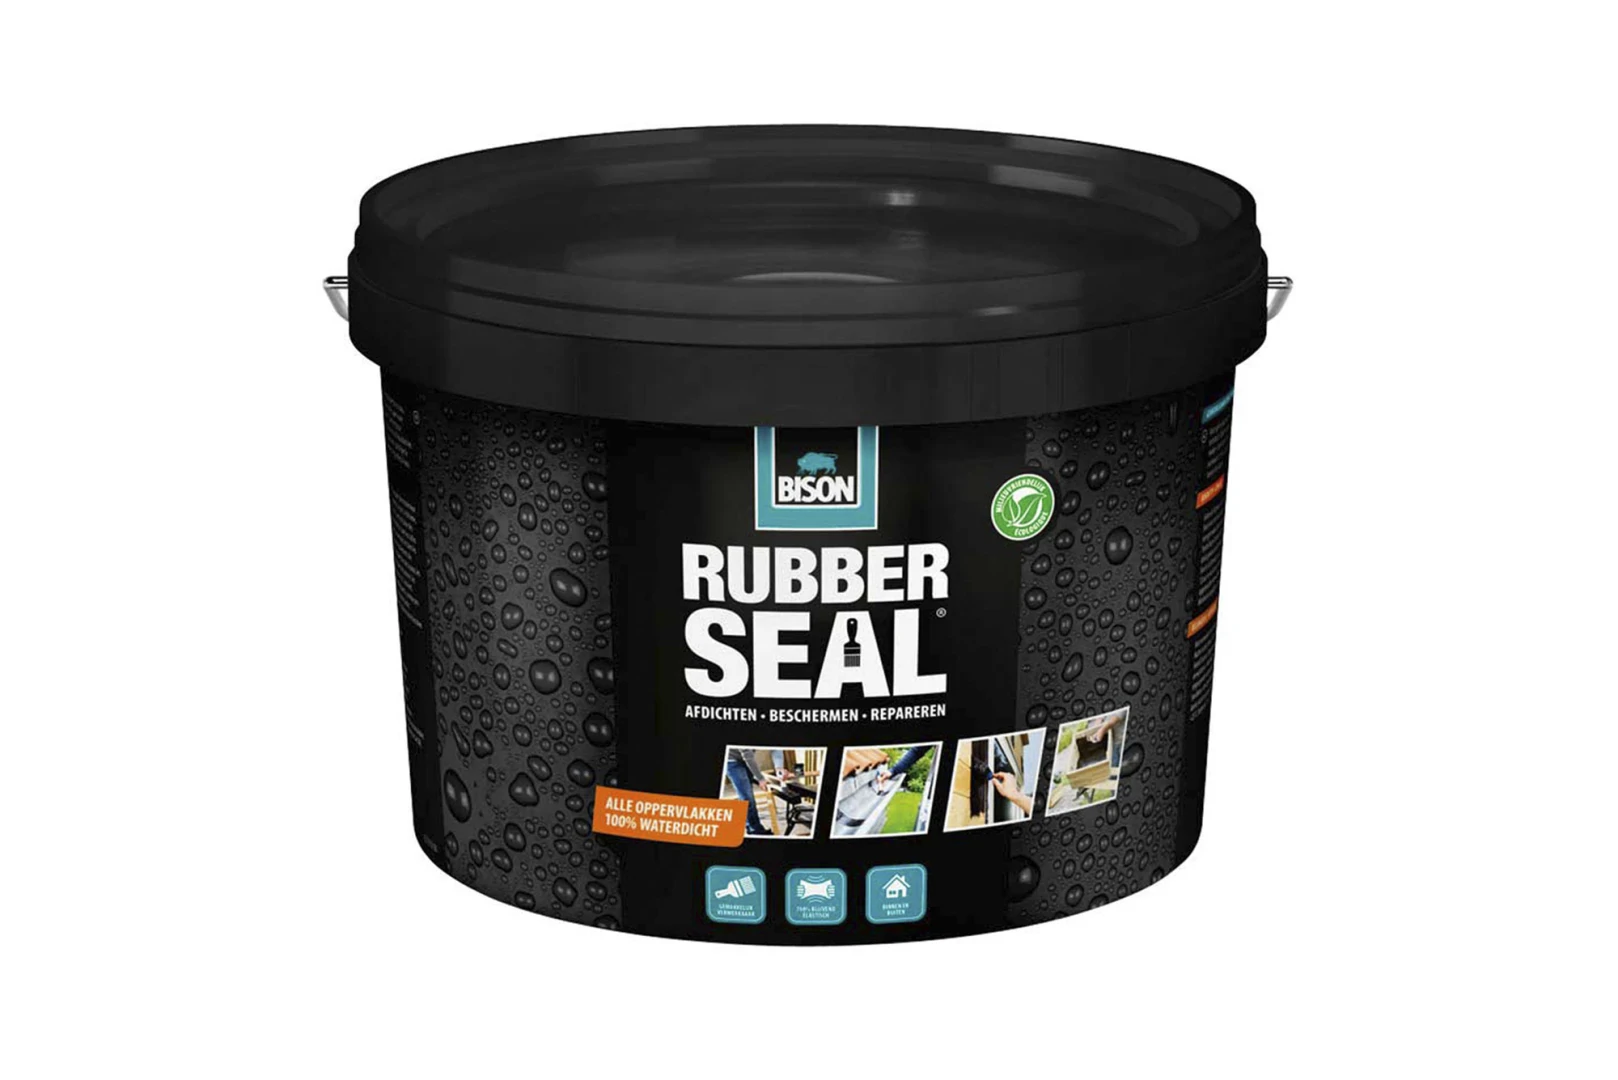 Bison rubberseal 2,5 liter